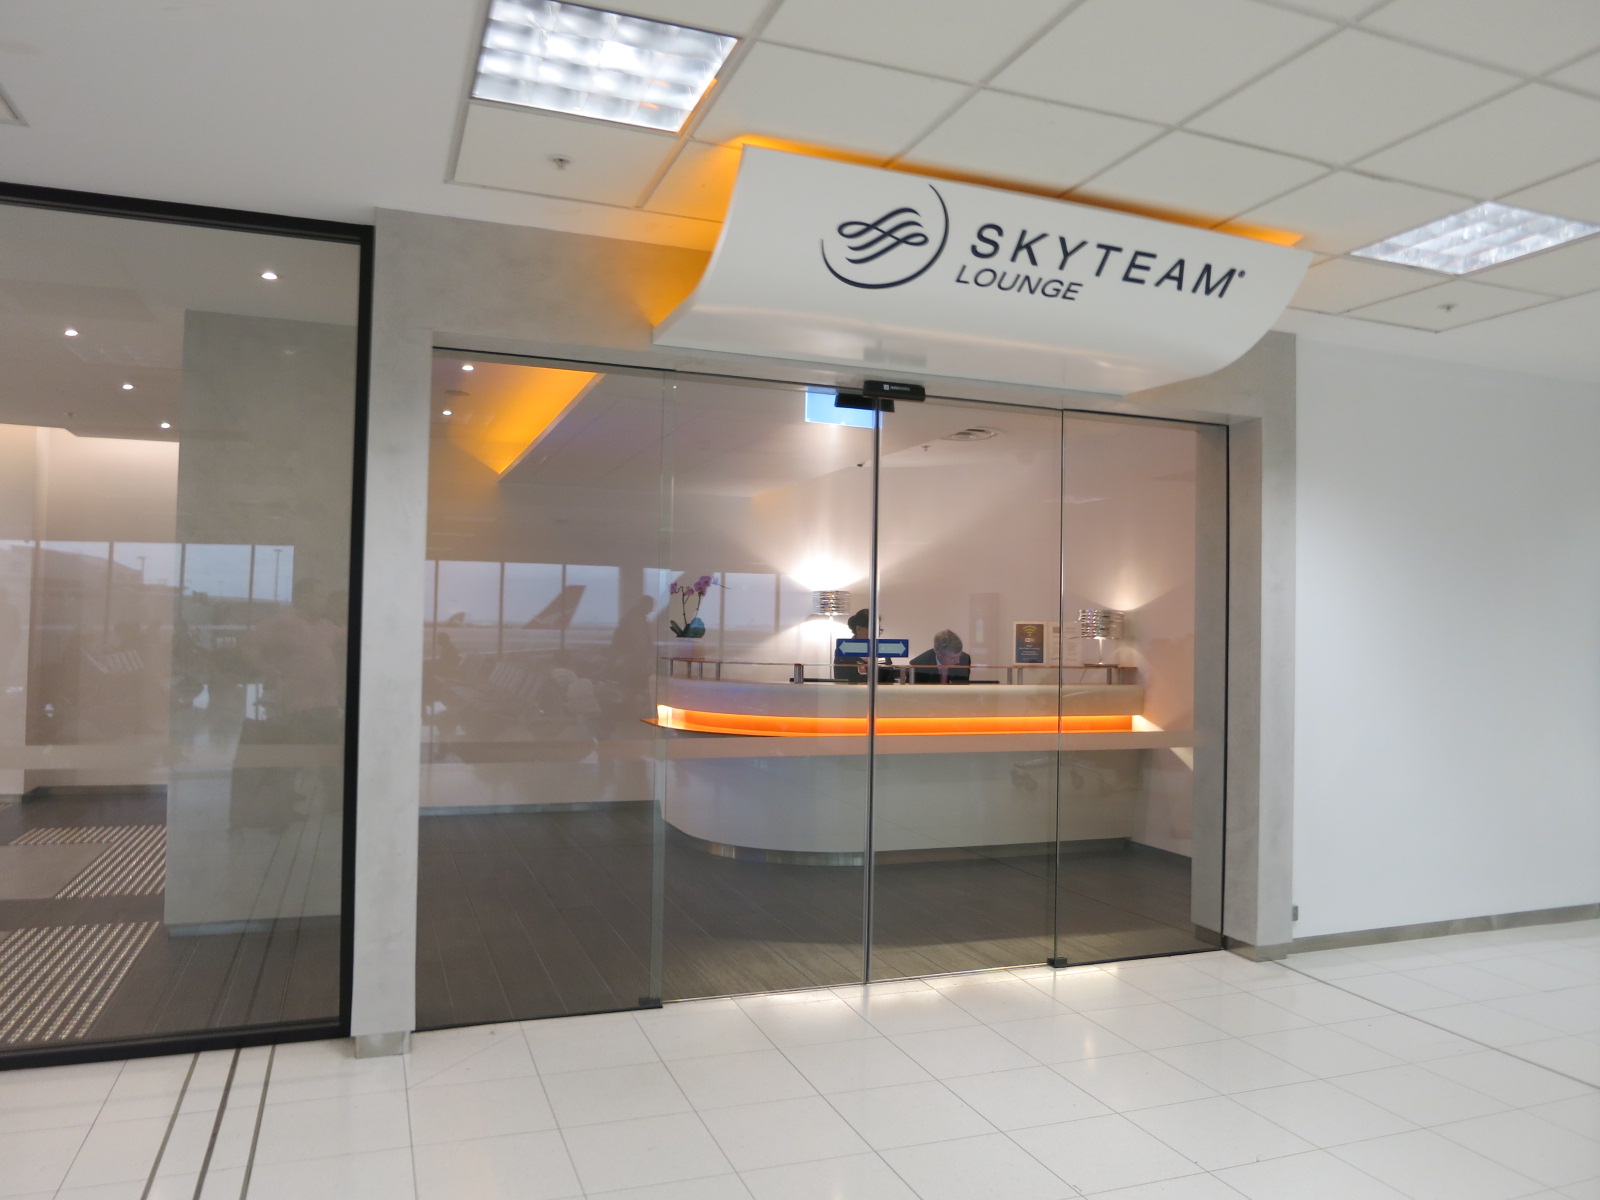 Skyteam Lounge Sydney review